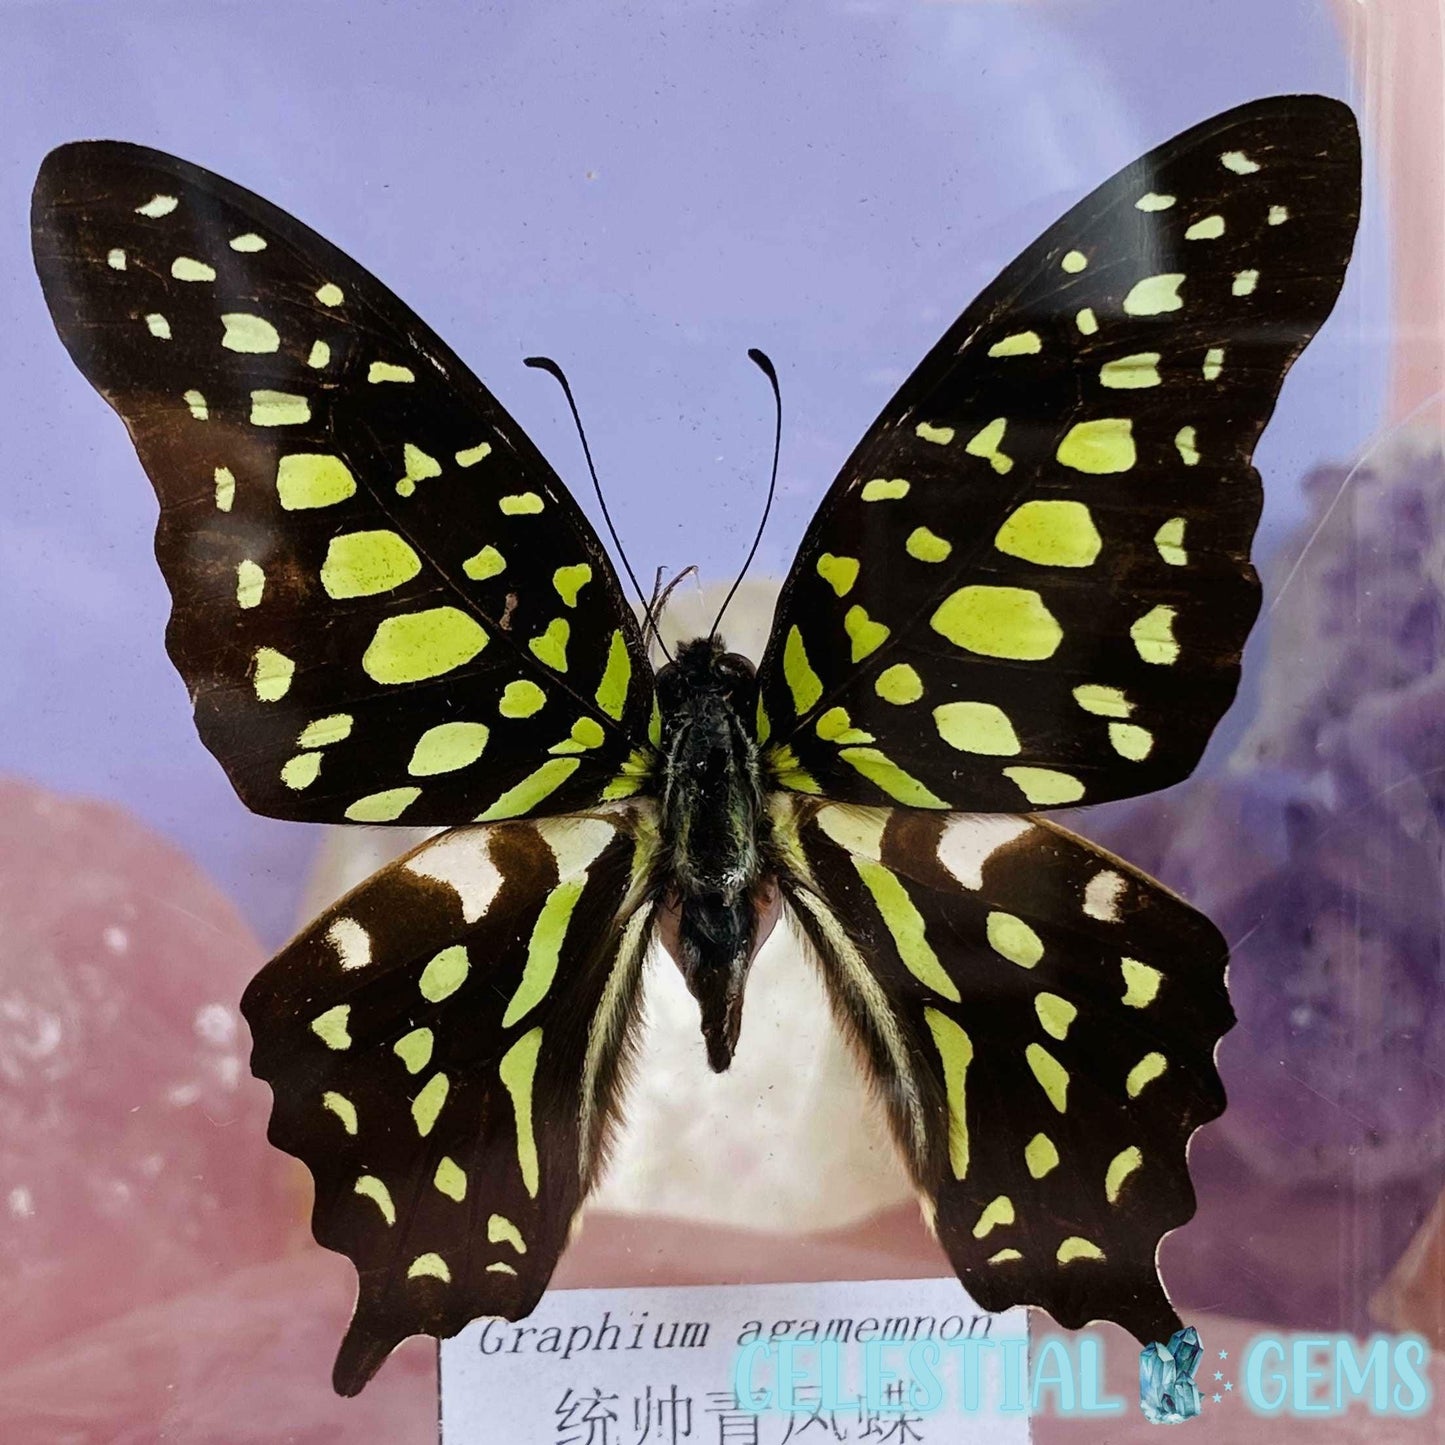 'Graphium Agamemnon' Butterfly Specimen in Frame